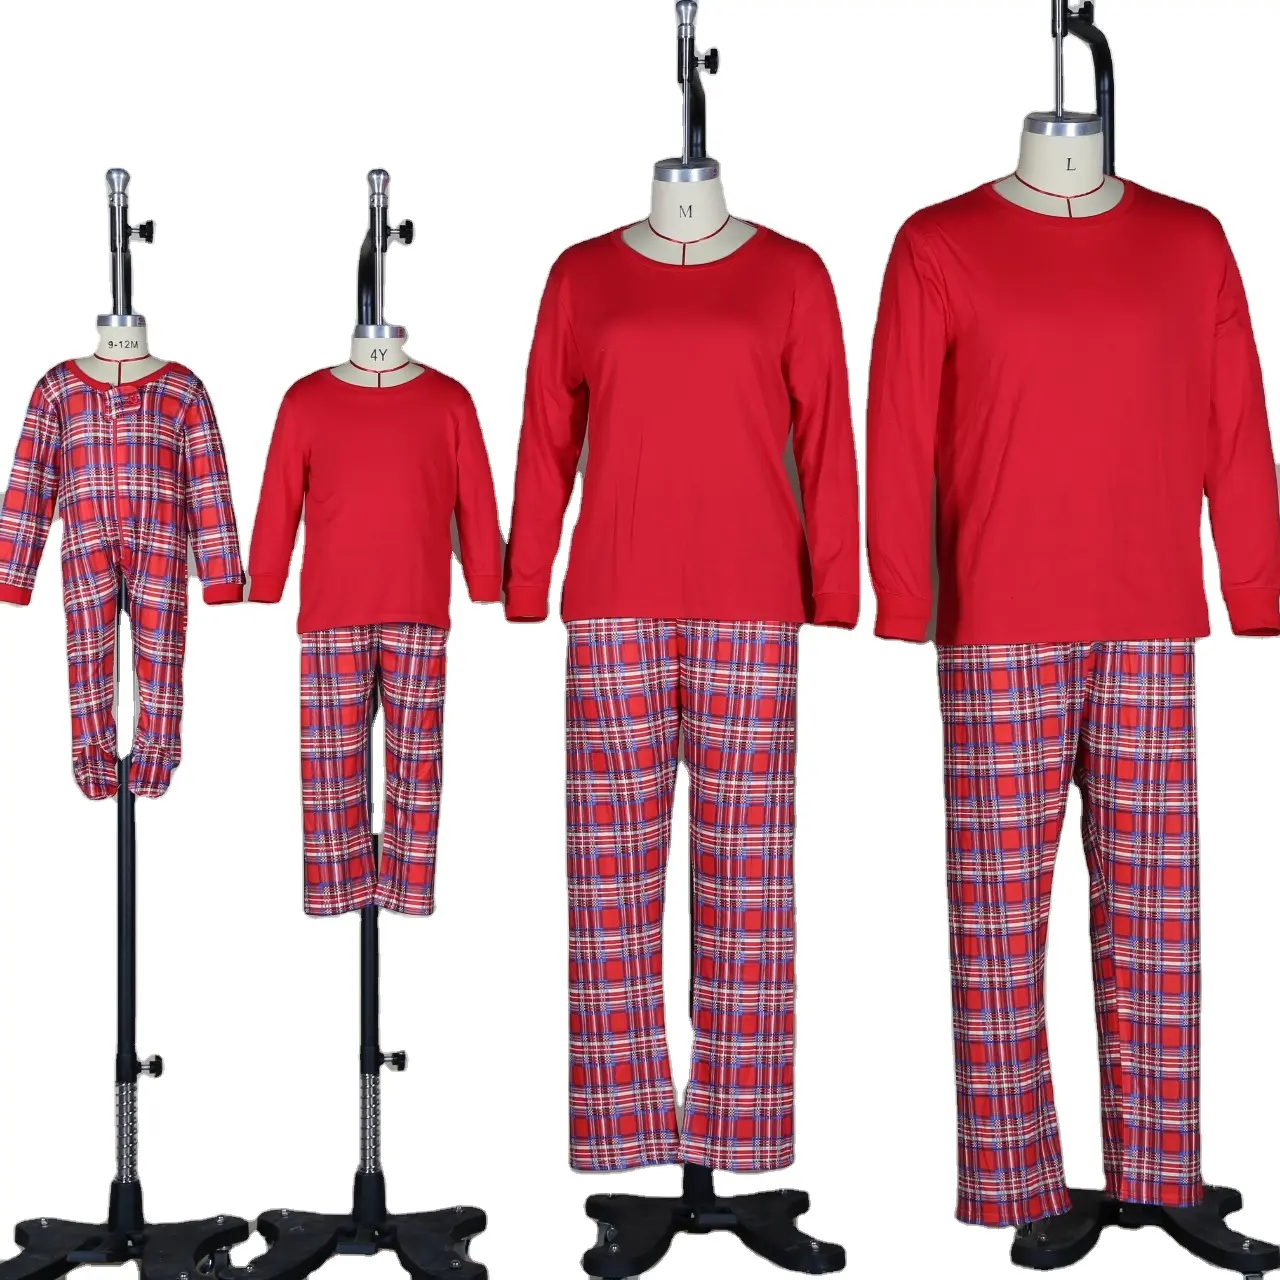 2022 Amazon New Hot Blank Customize Family Christmas Matching Pajamas Knitted Cotton Pajamas Set